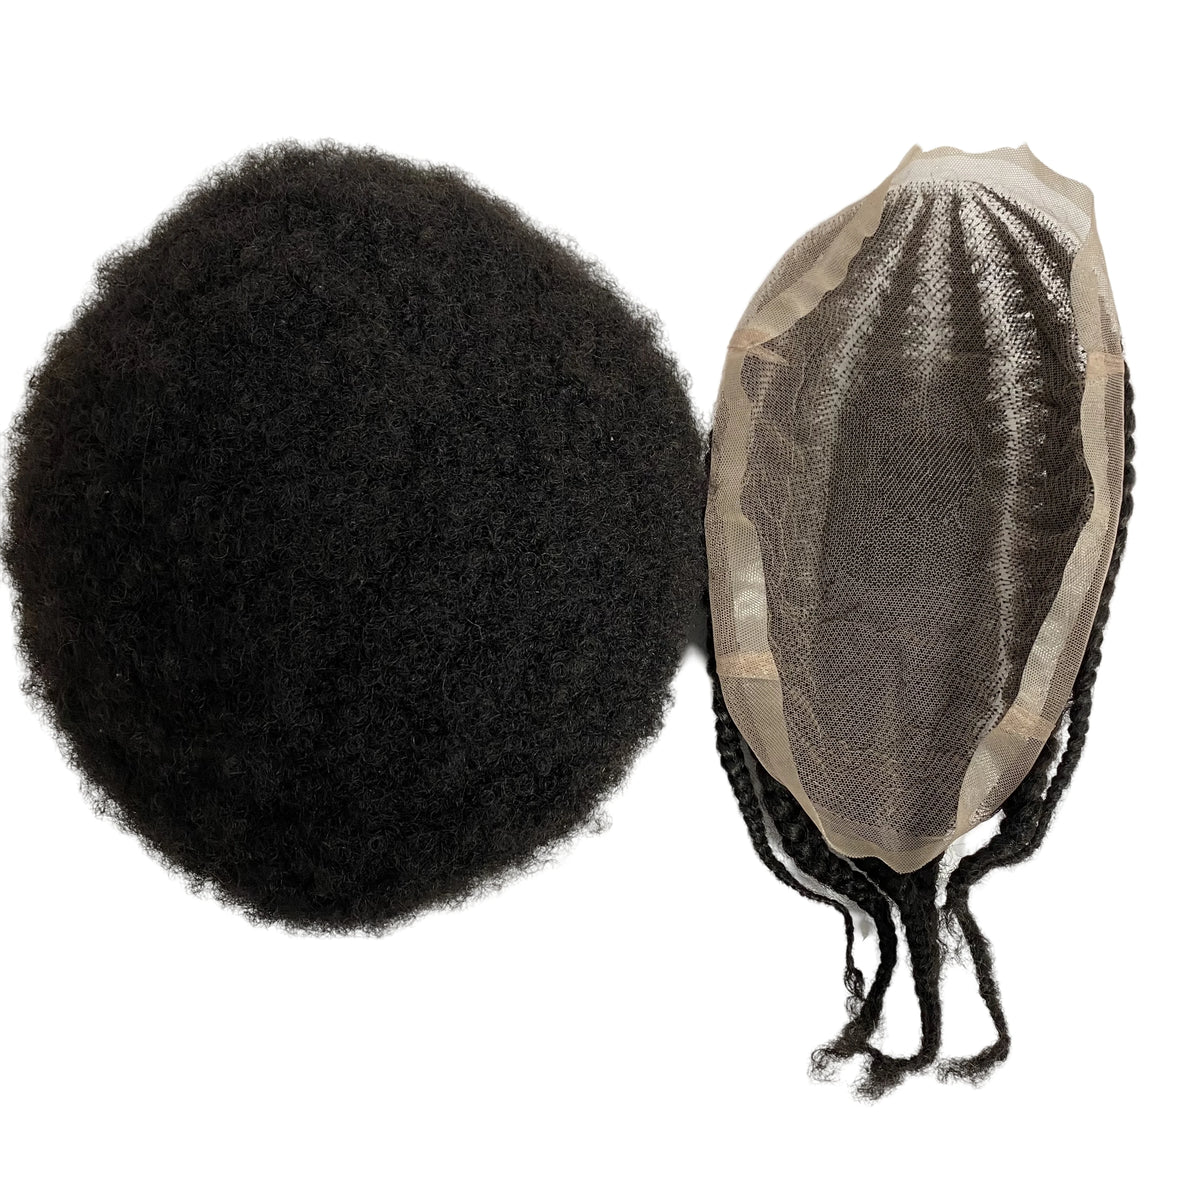 Afro Corn Braids Full Lace Toupee for Black Men